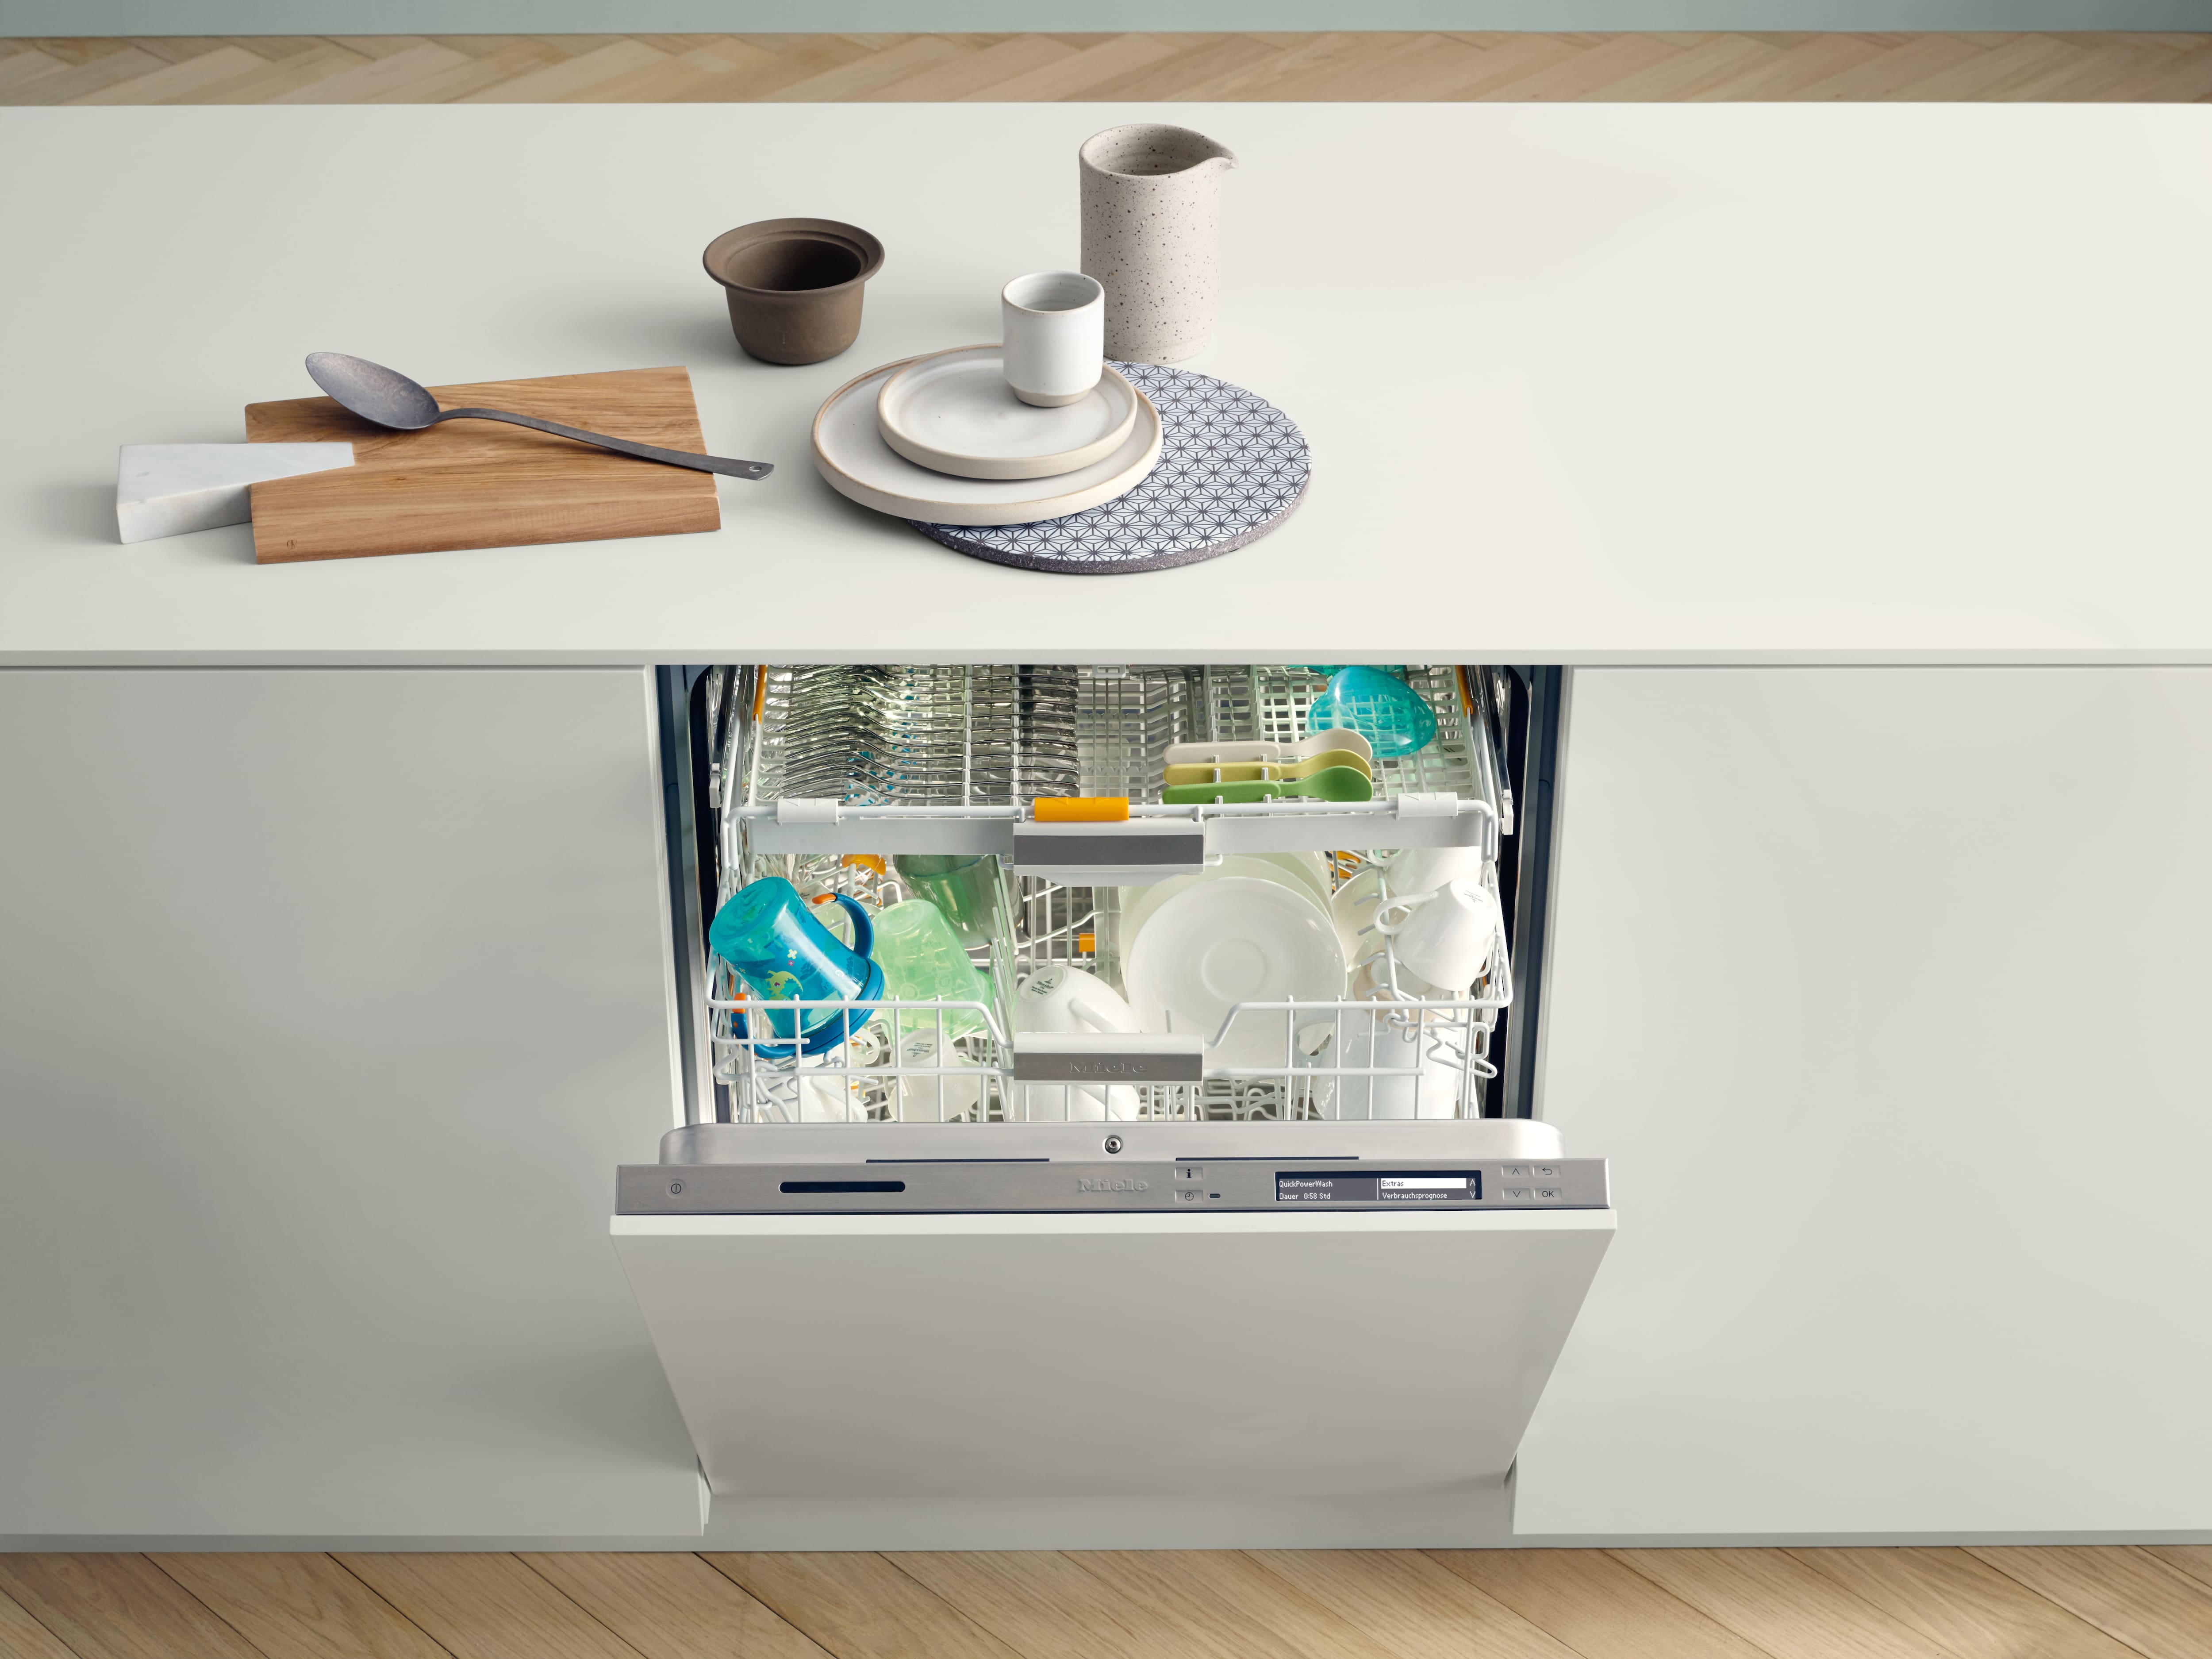 miele integrated dishwasher